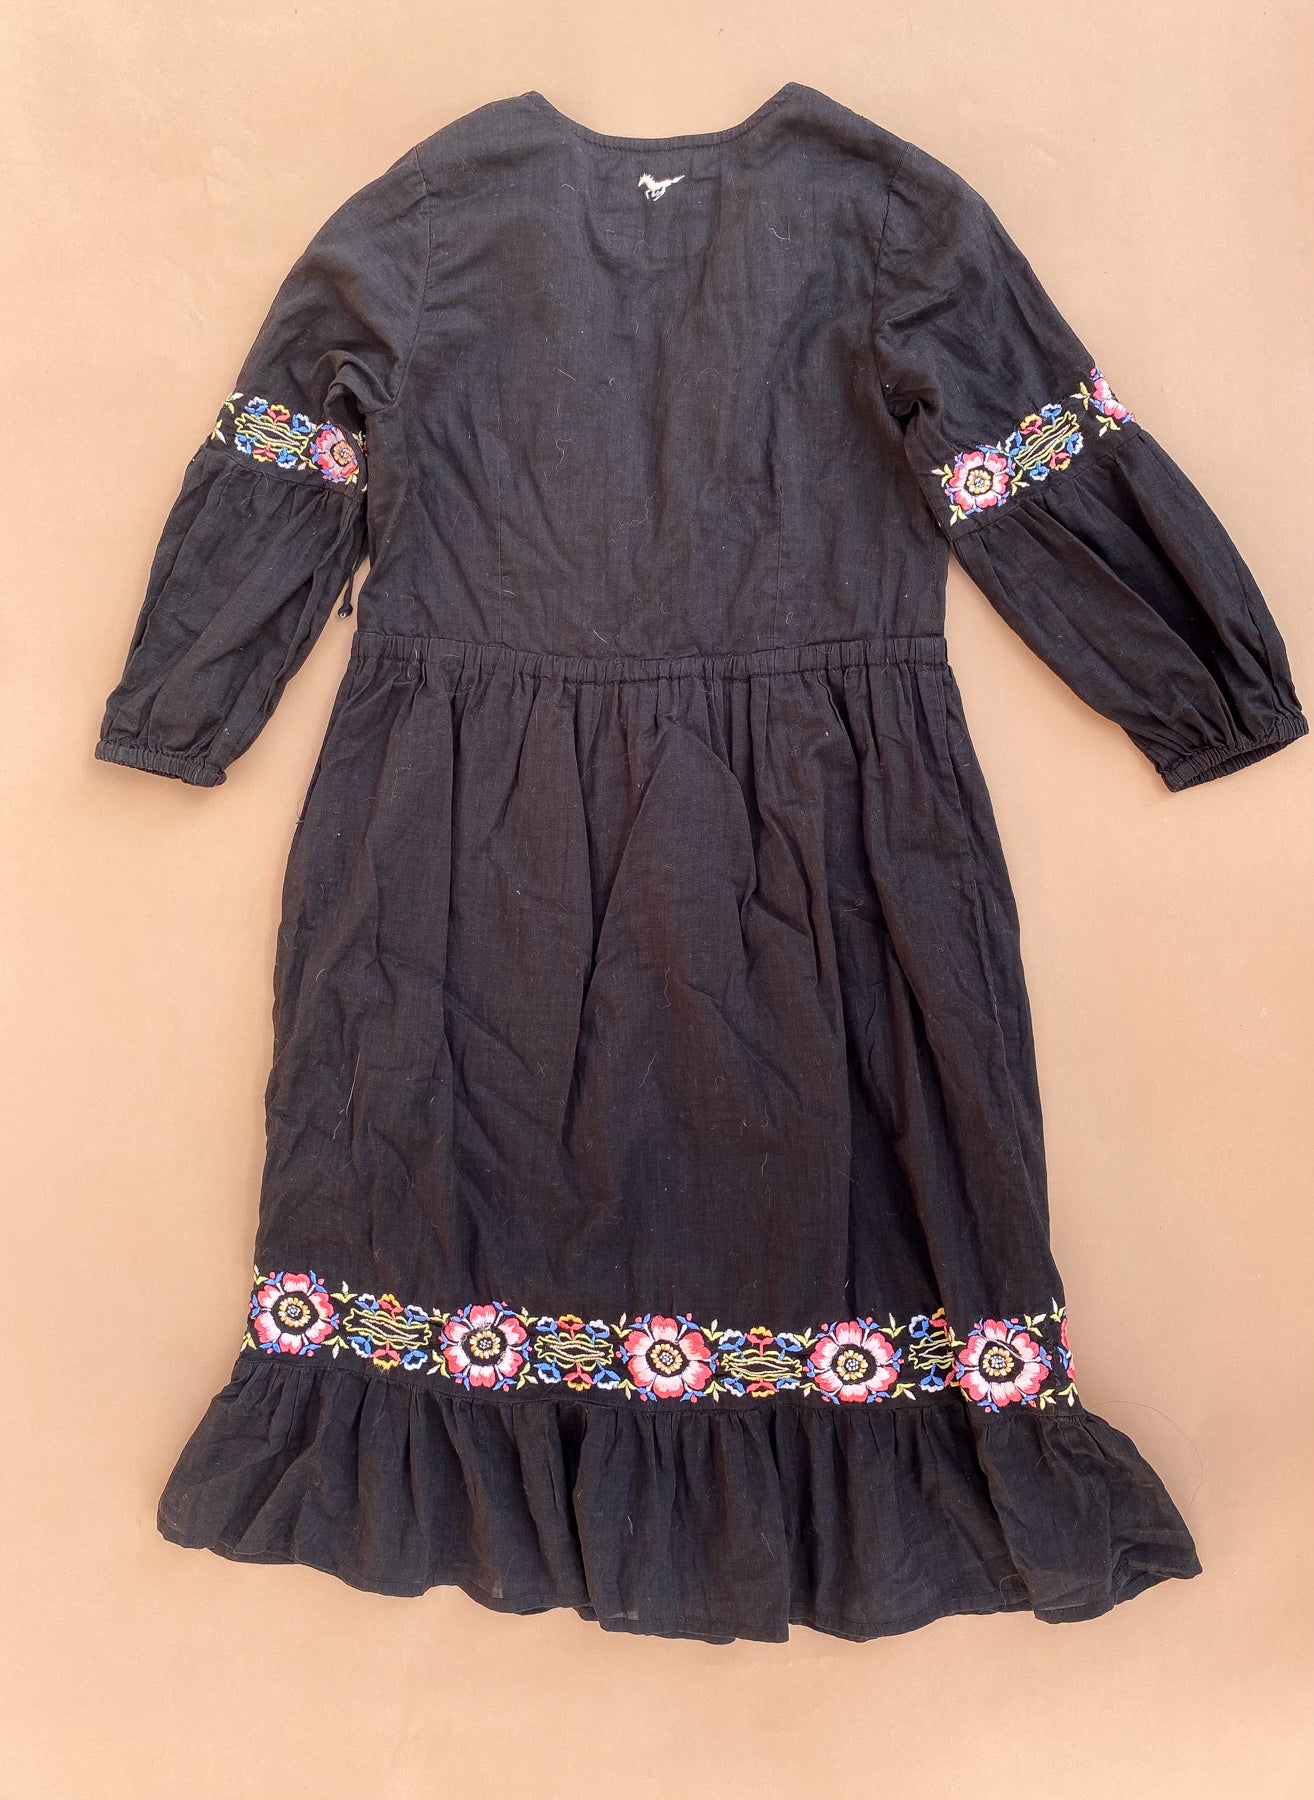 CHASING UNICORNS Kids Black Cotton Embroidered Maxi Dress 5-7